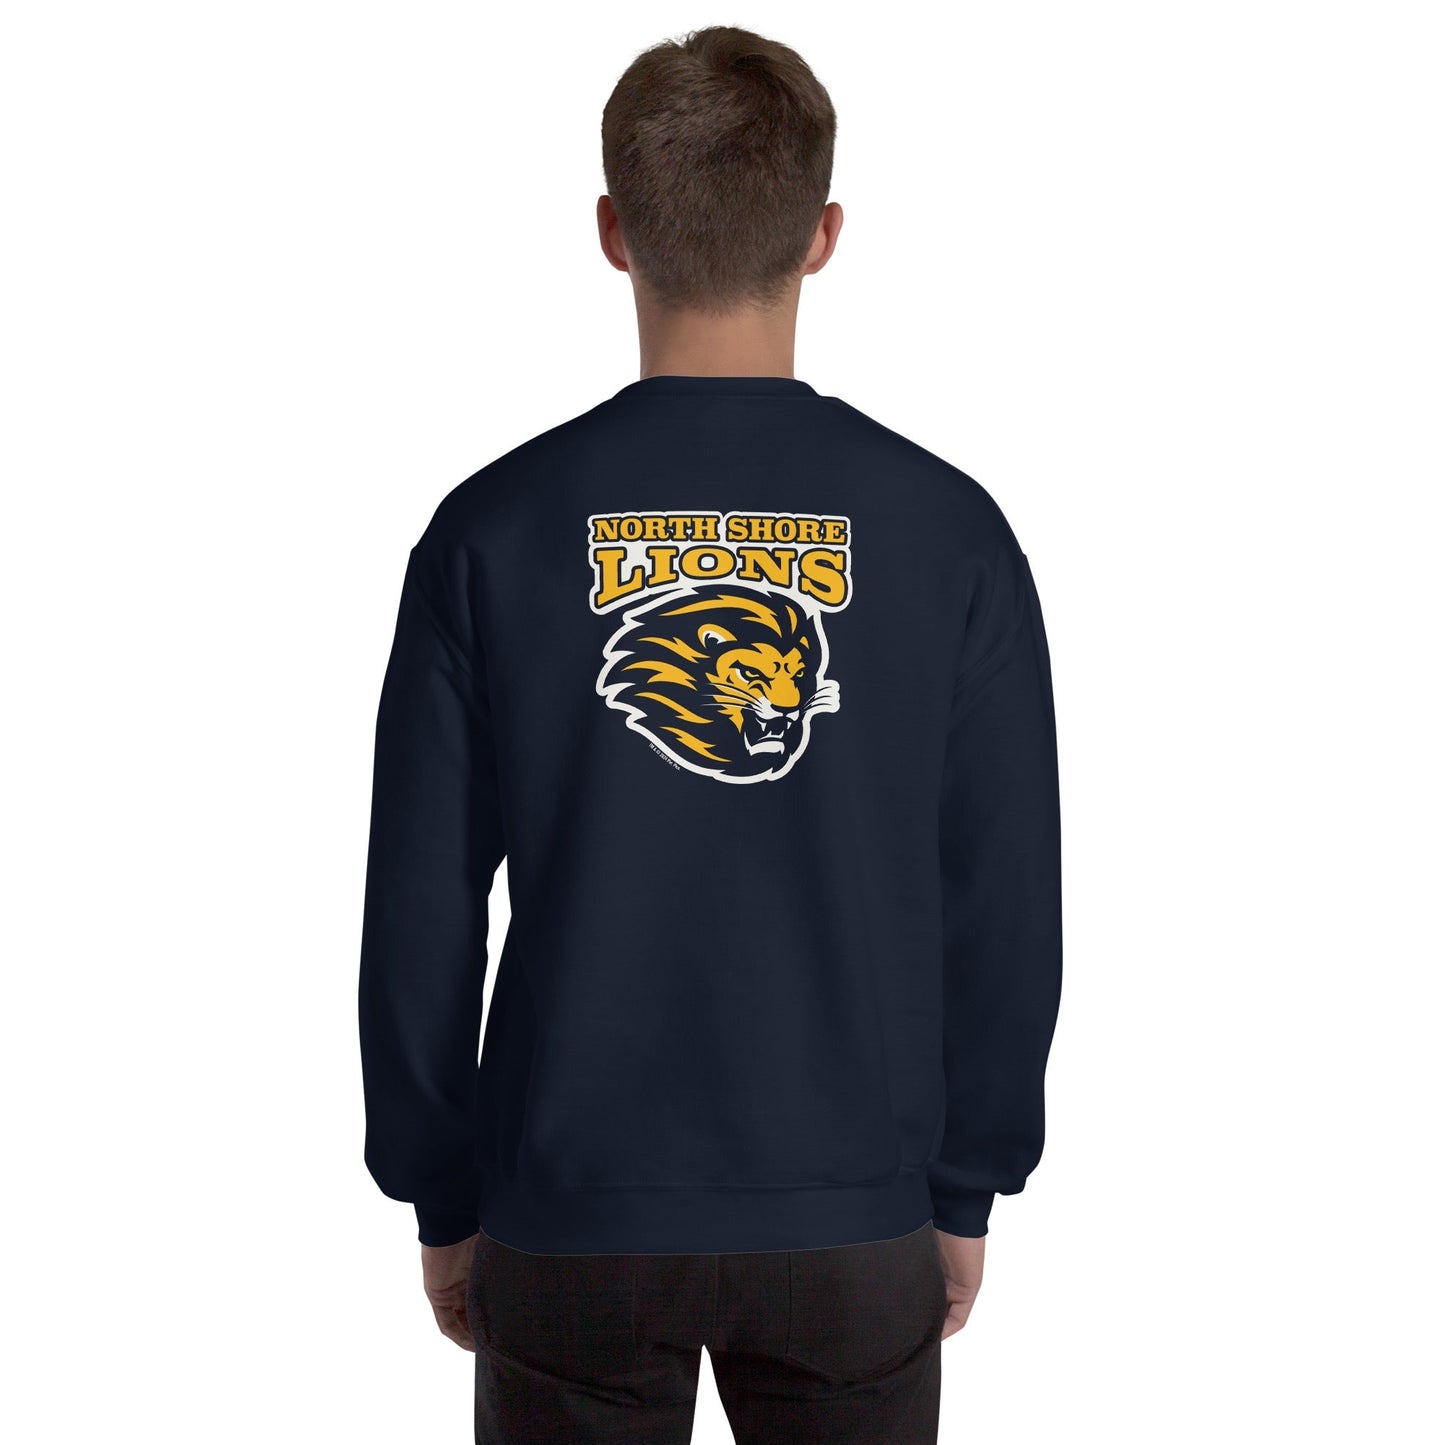 Mean Girls Musical Lions Adult Sweatshirt - Paramount Shop